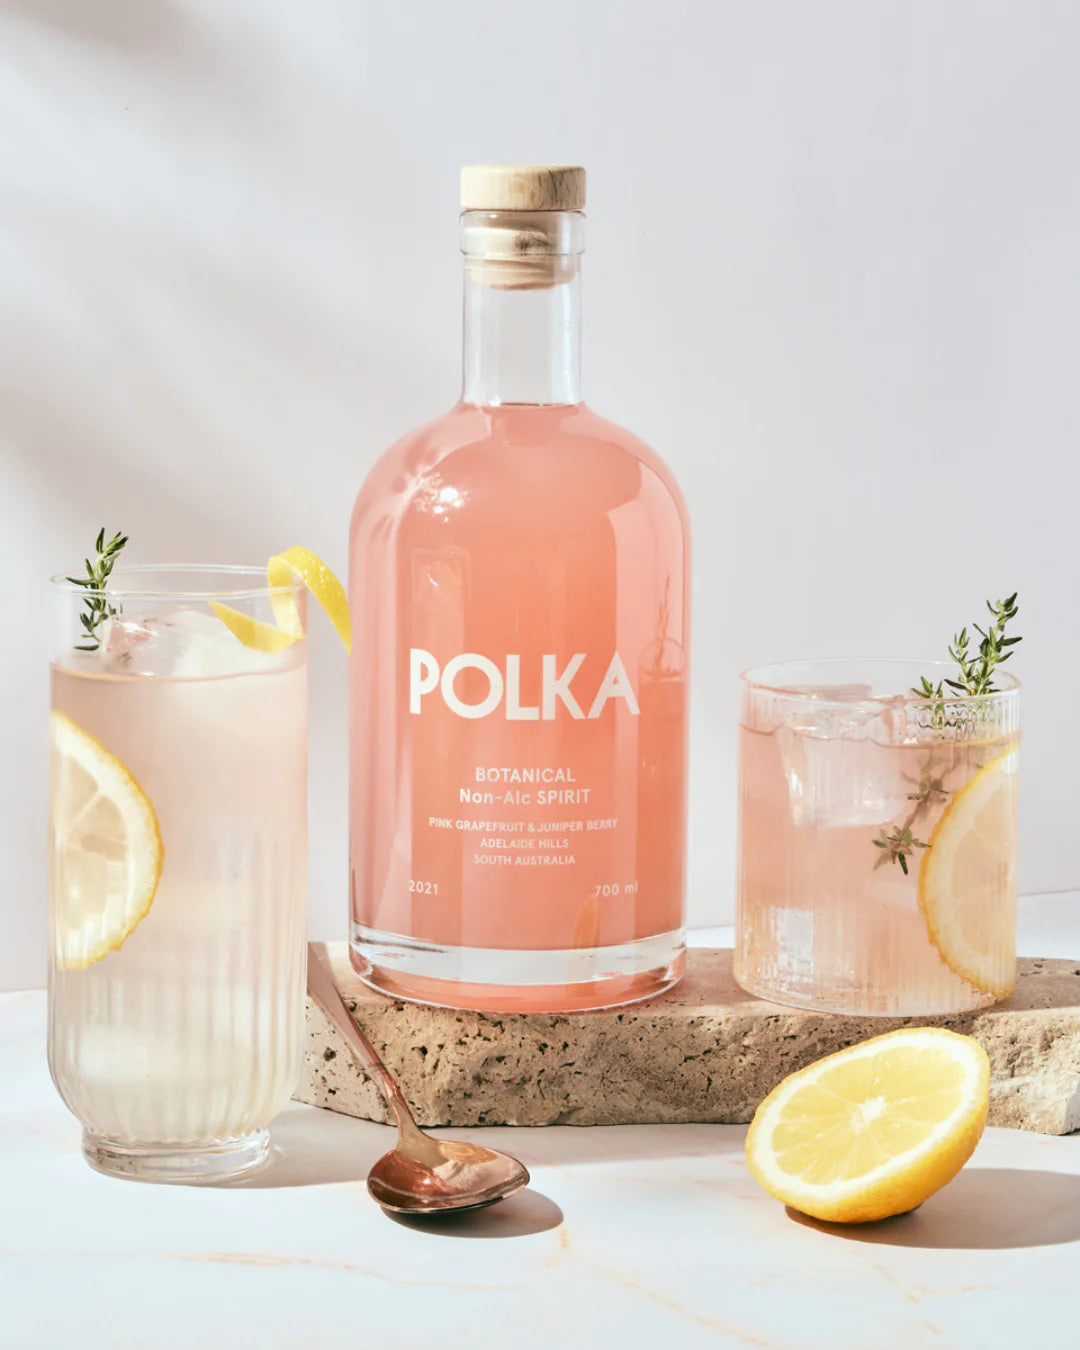 POLKA Botanical Spirit (non-alcoholic)